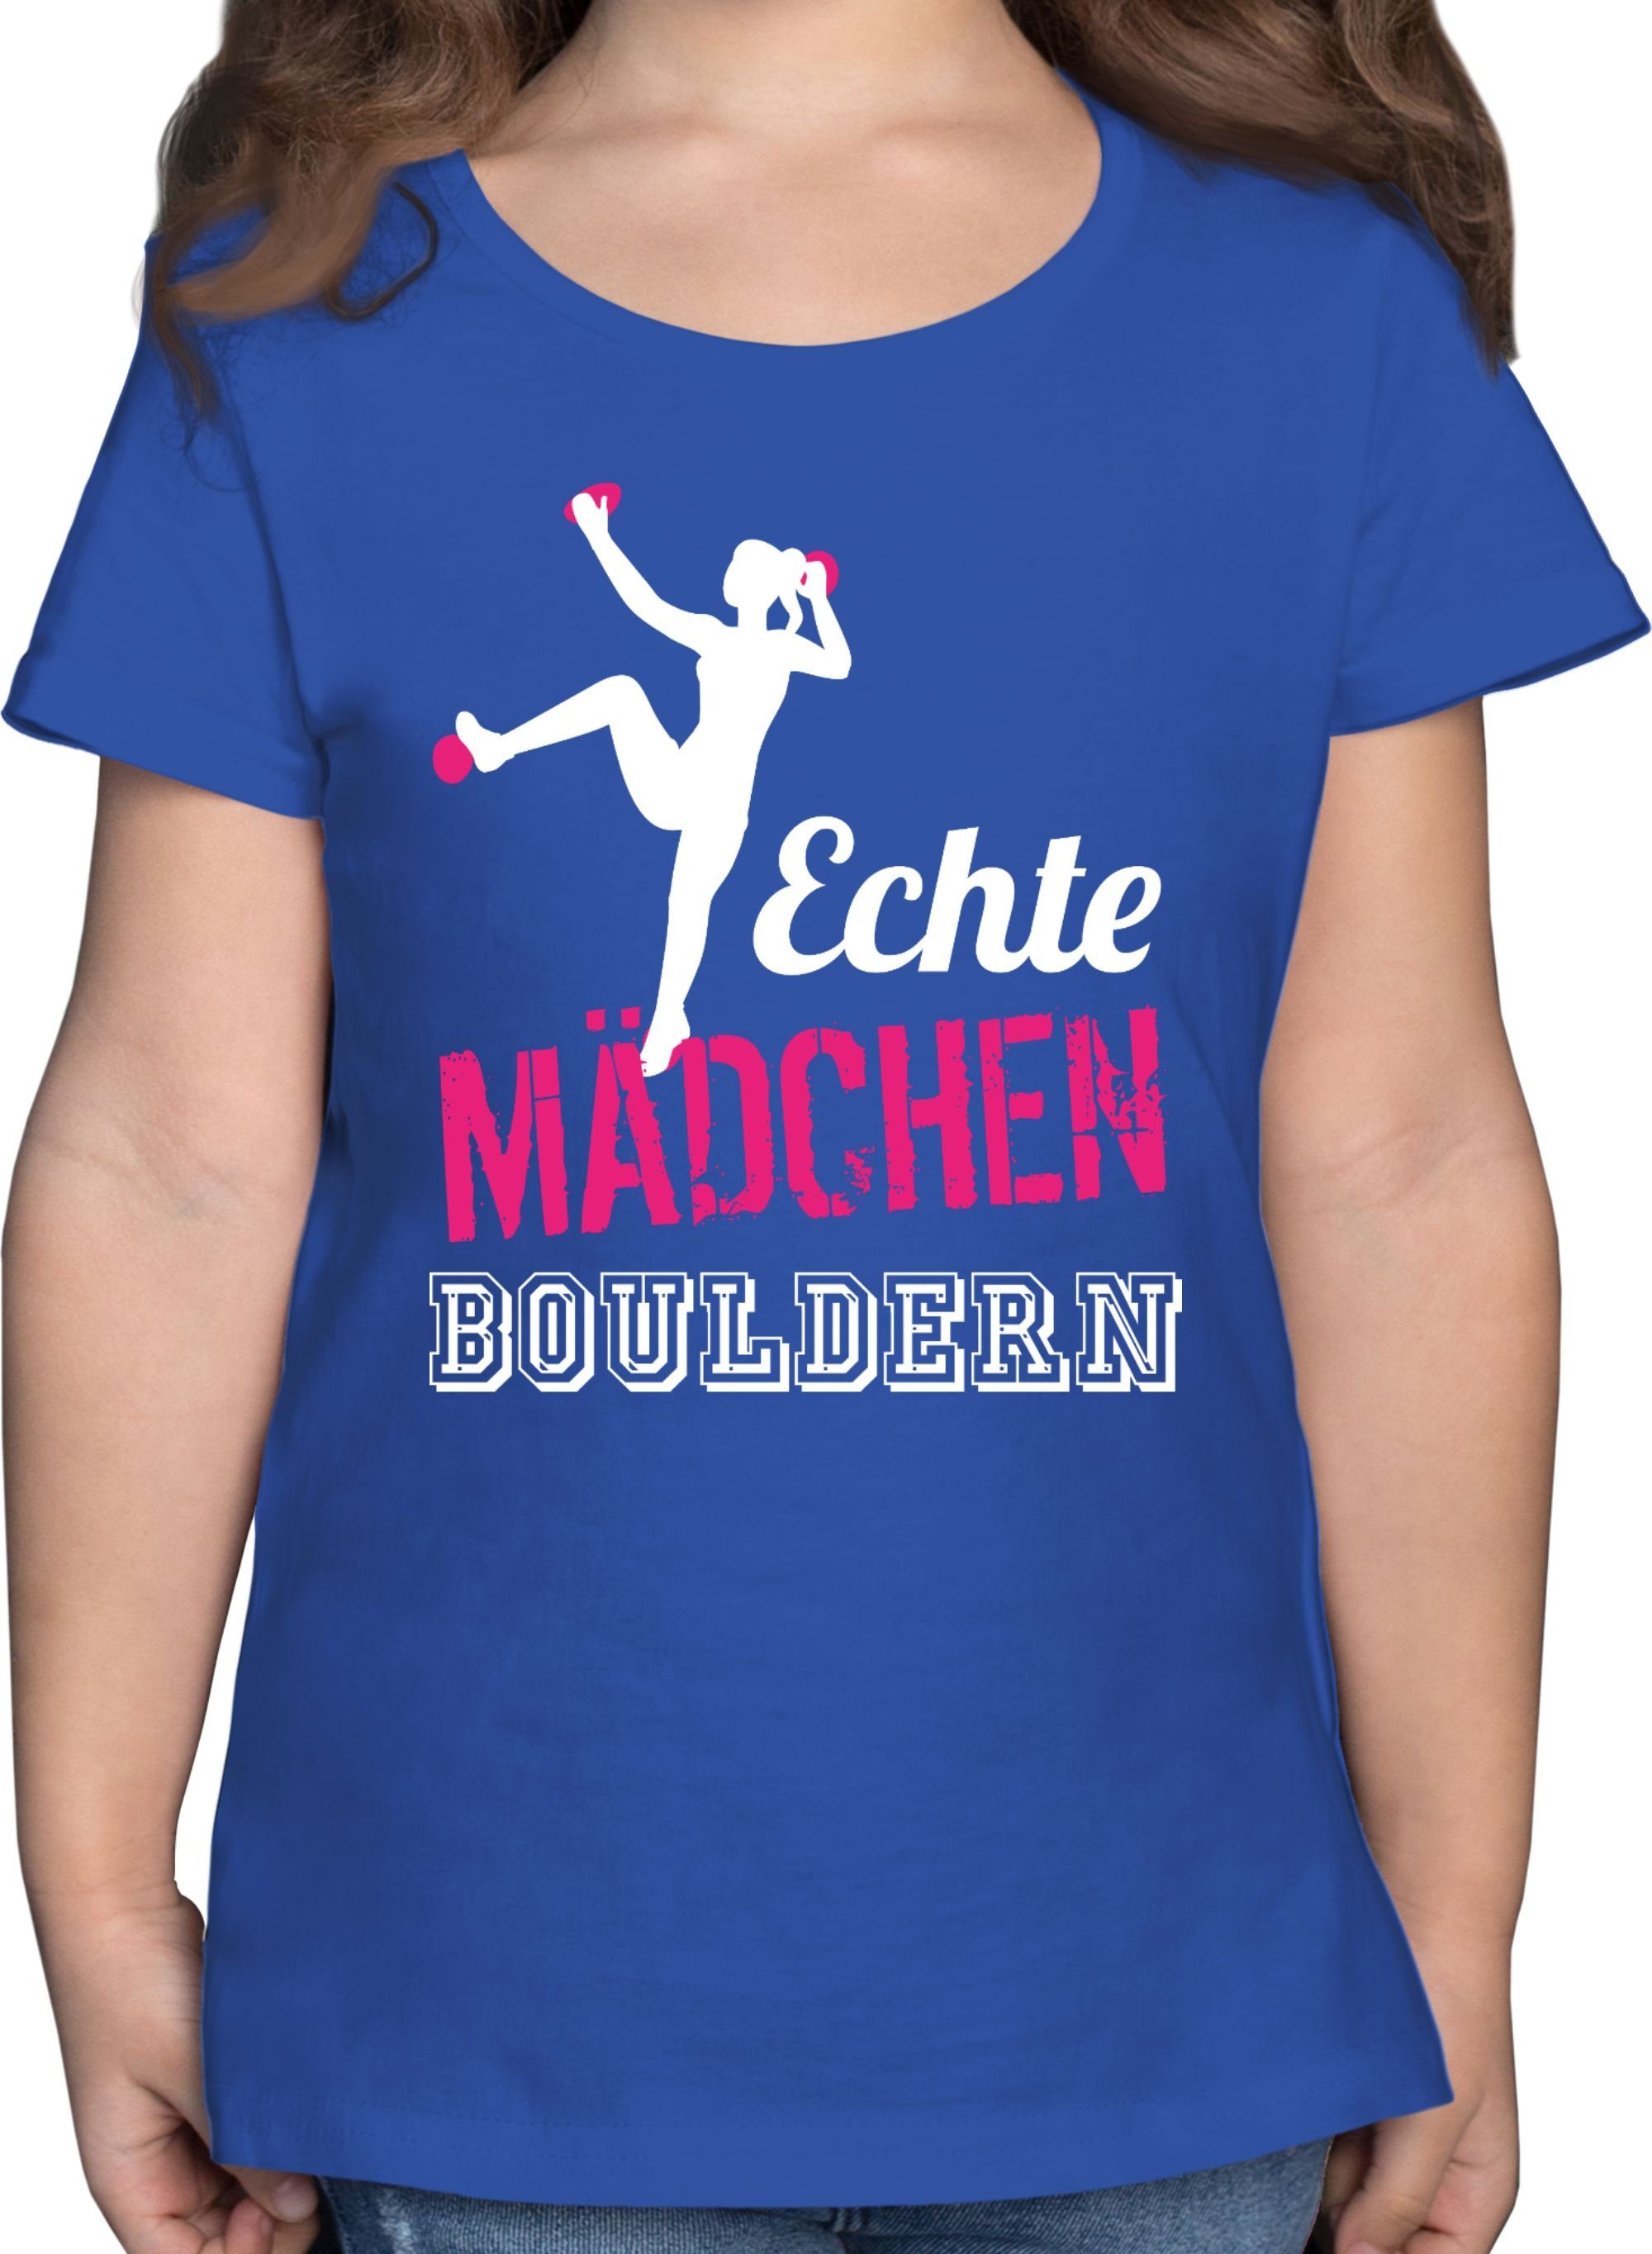 Sport T-Shirt Mädchen bouldern Kleidung 3 Echte Kinder fuchsia/weiß Shirtracer Royalblau